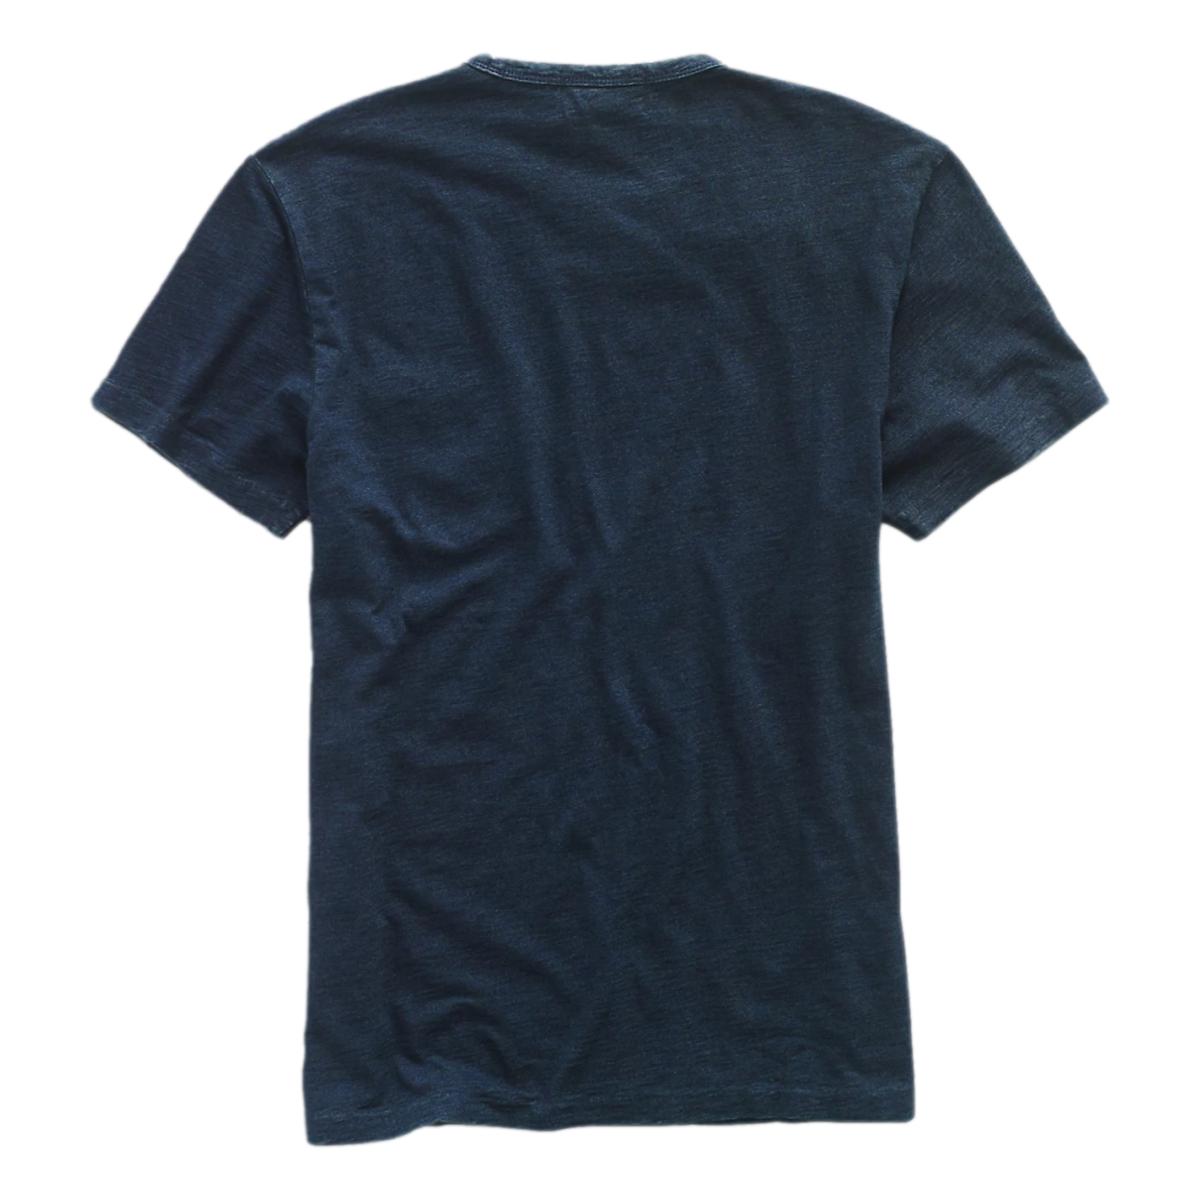 Indigo Jersey Pocket T-Shirt Rinsed Indigo - T Shirt